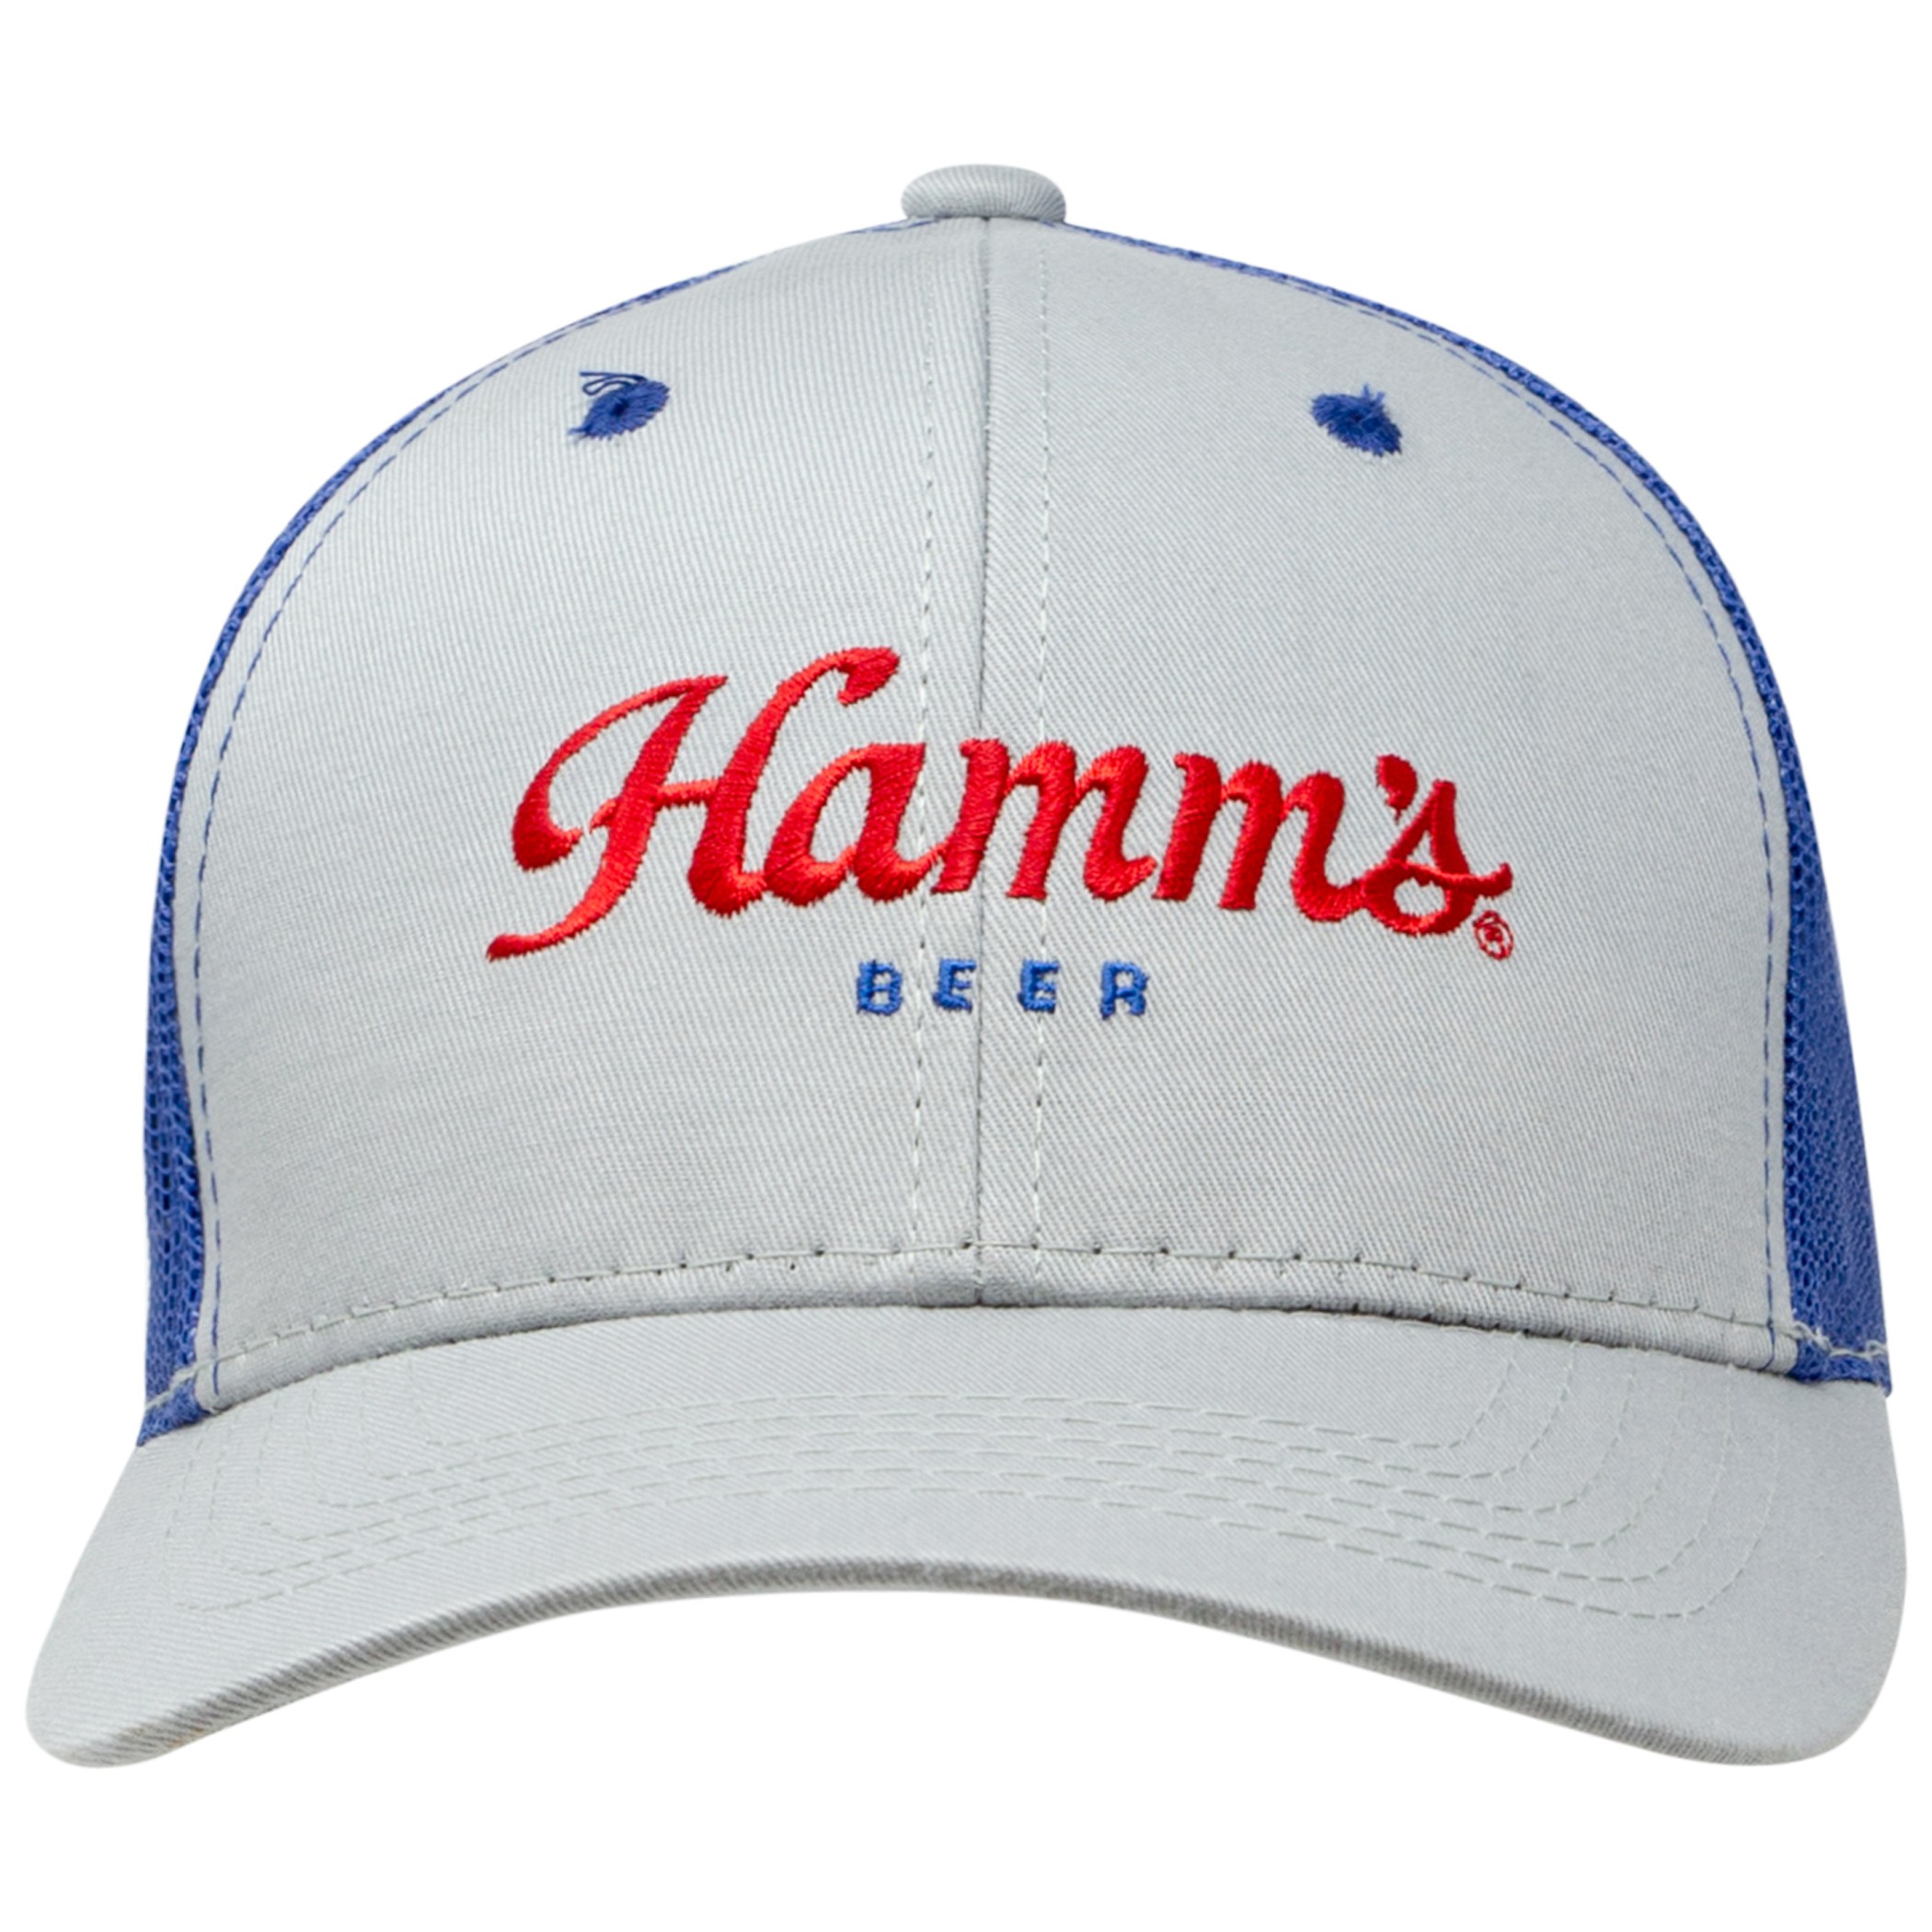 Hamm's Mesh Grey Trucker Hat